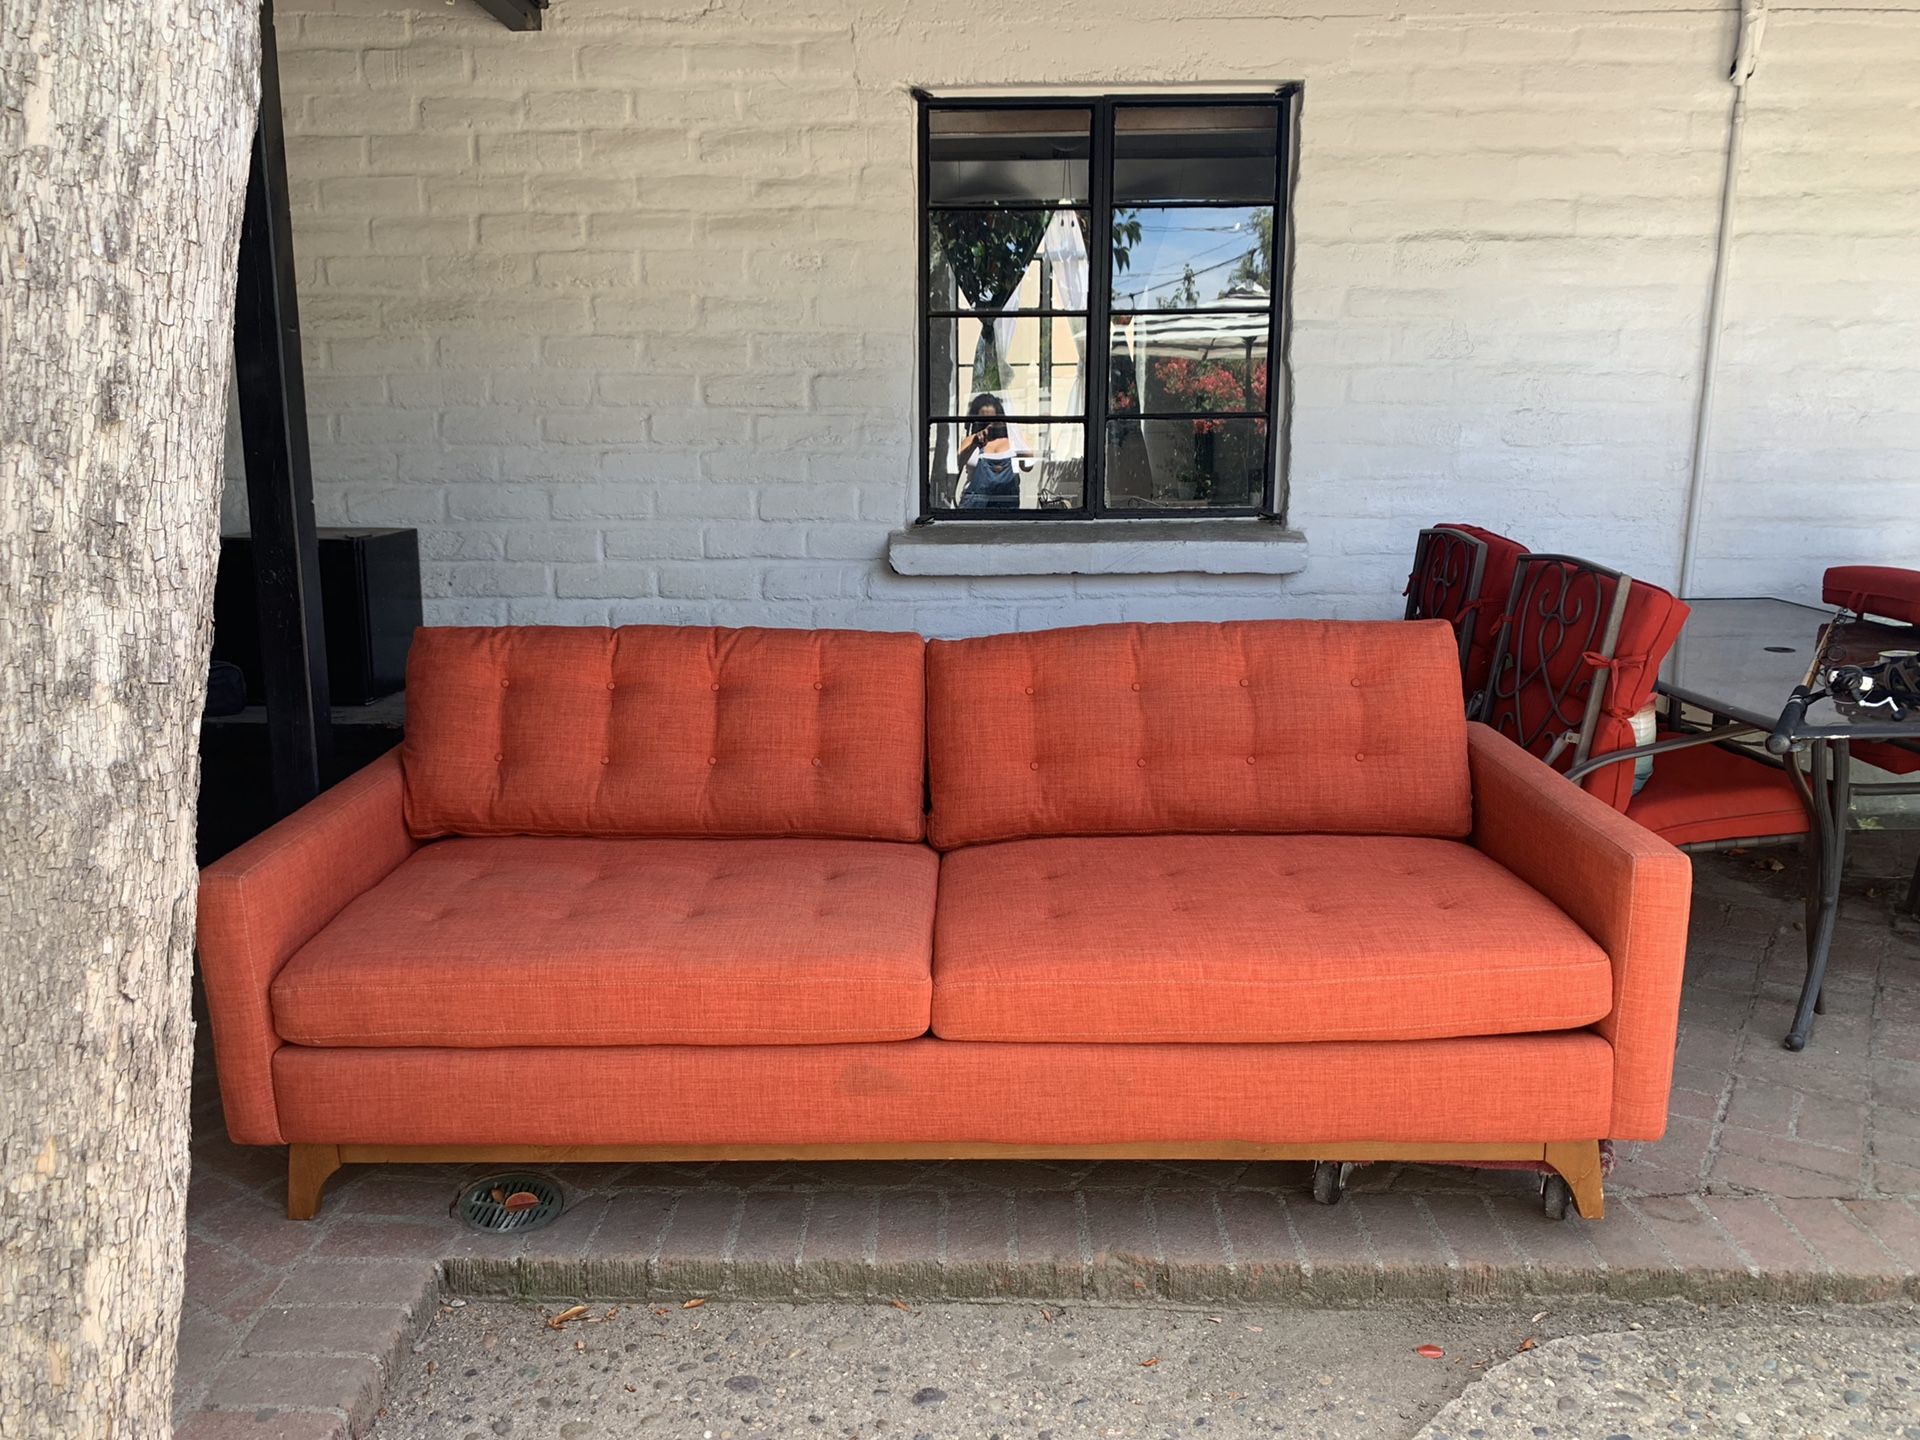 Orange/ coral sofa couch